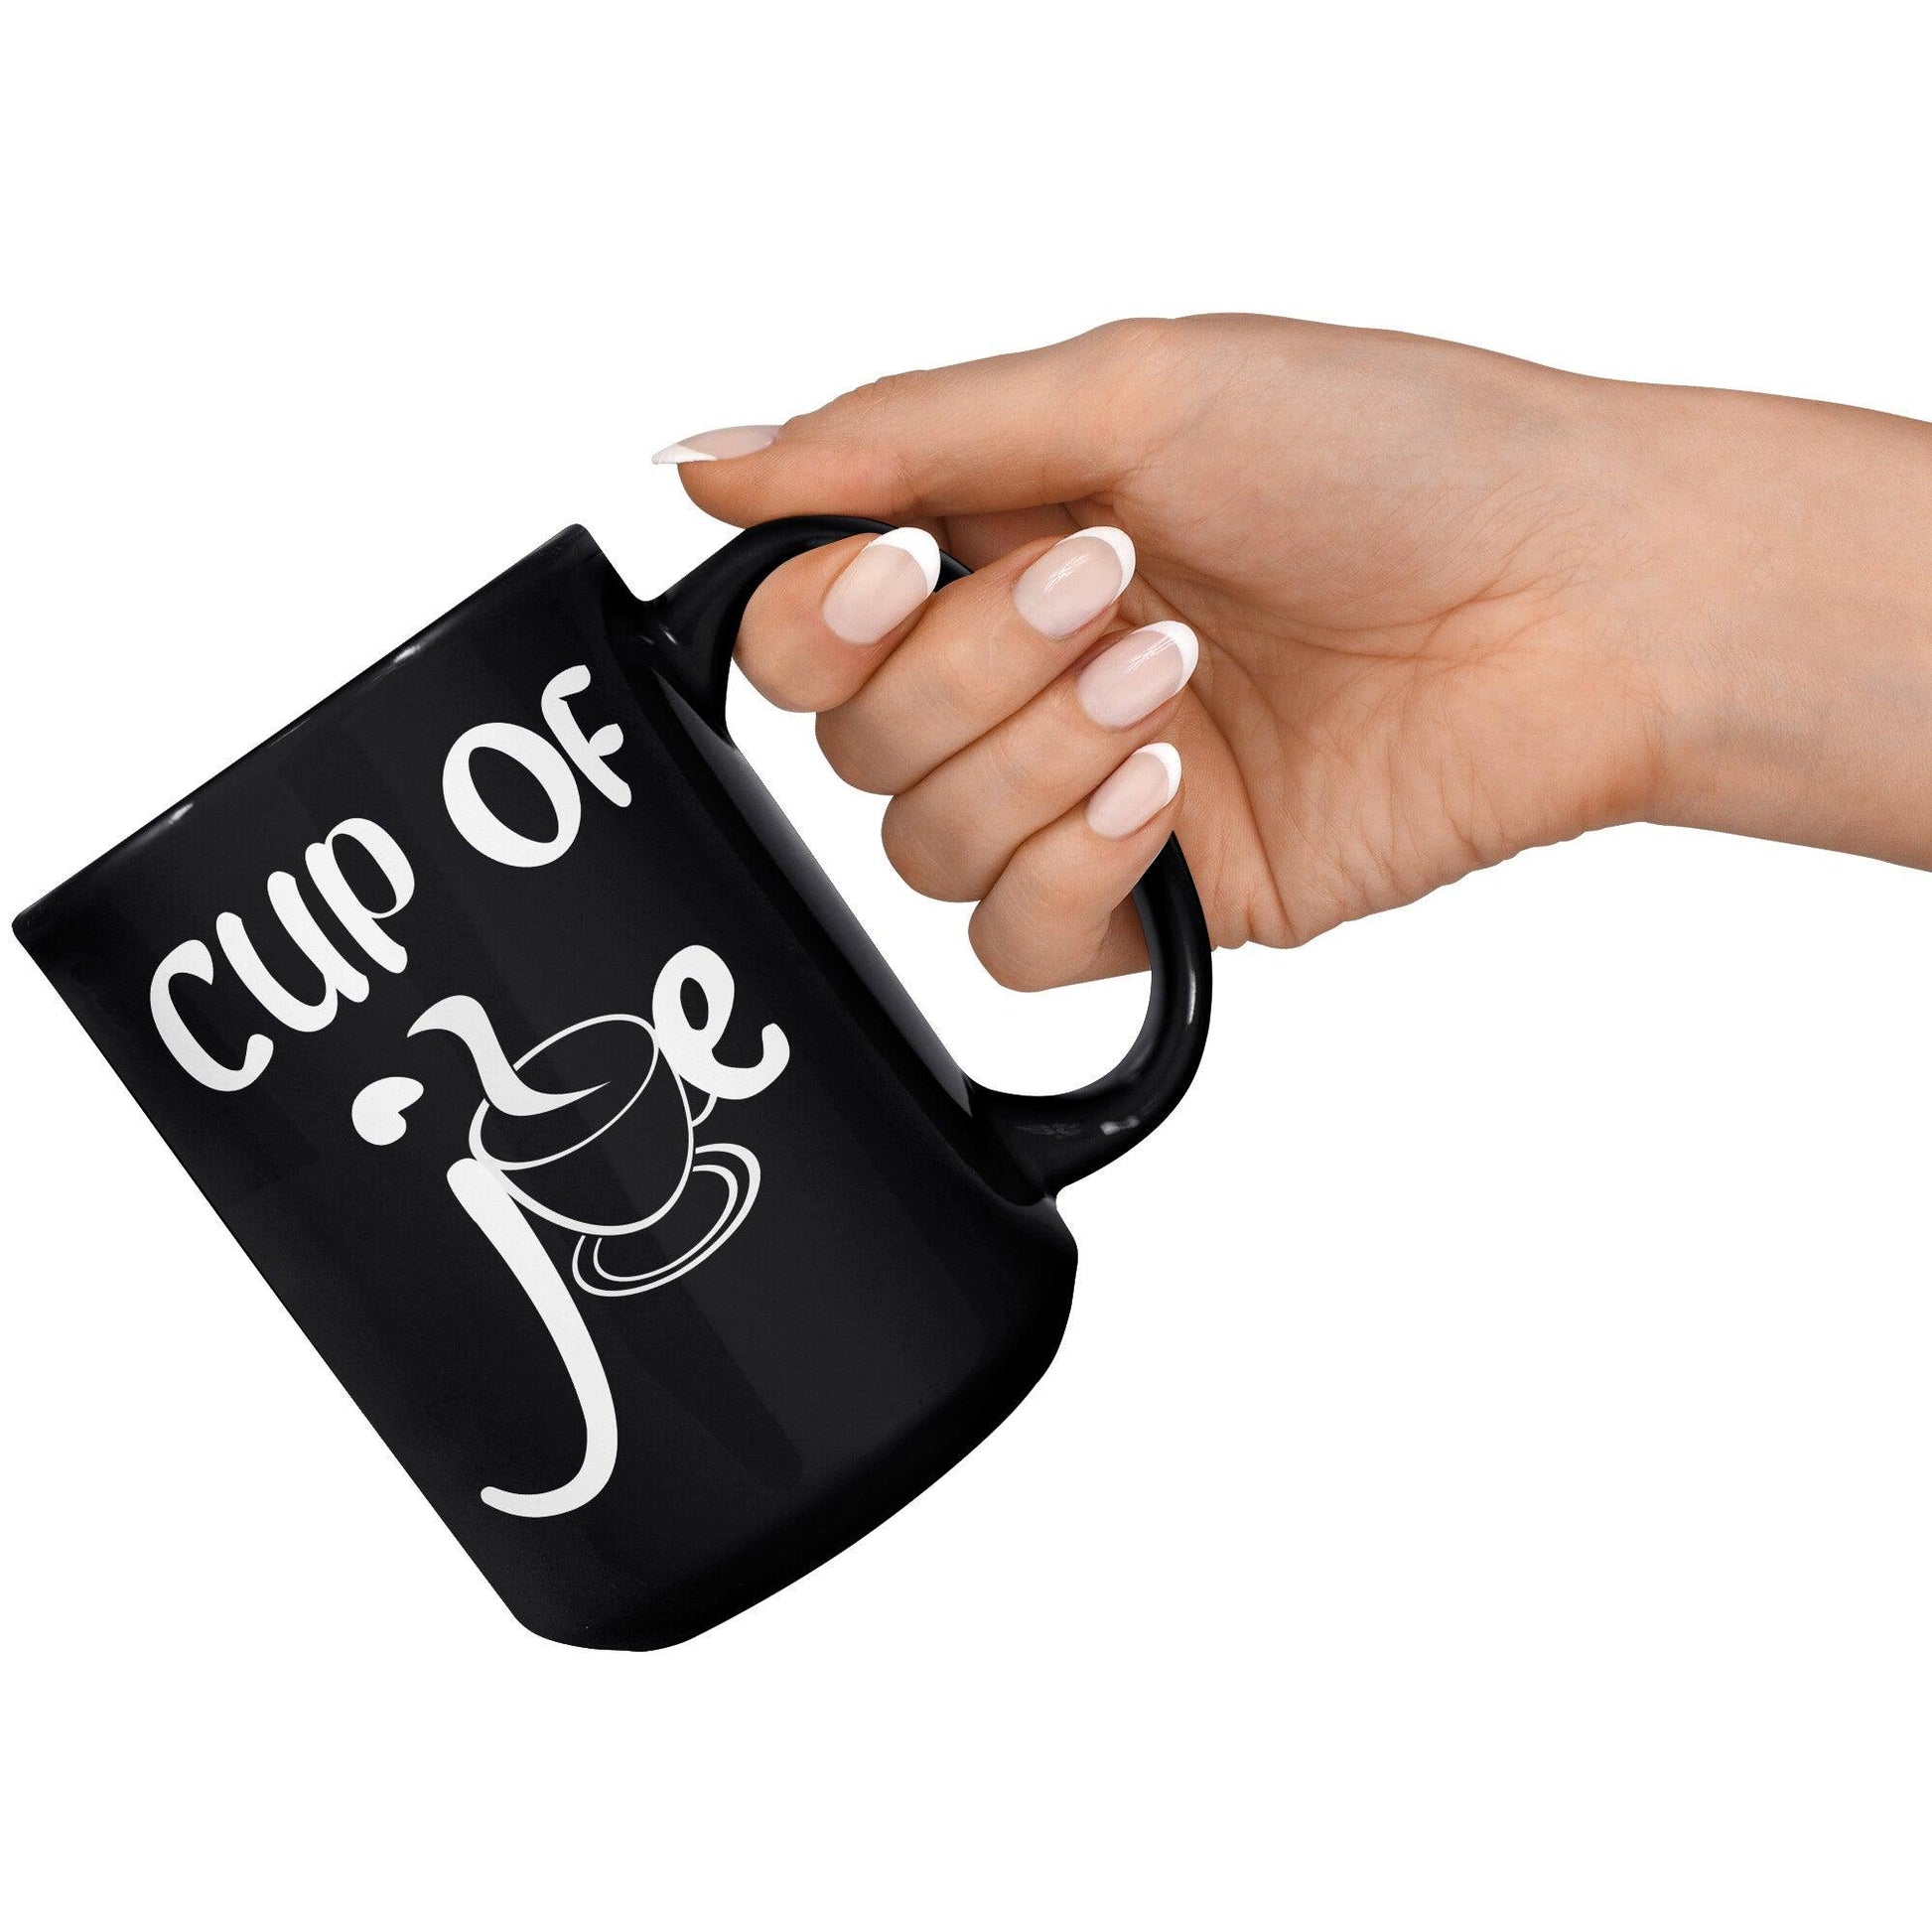 Cup of Joe Light Black Mug - TheGivenGet